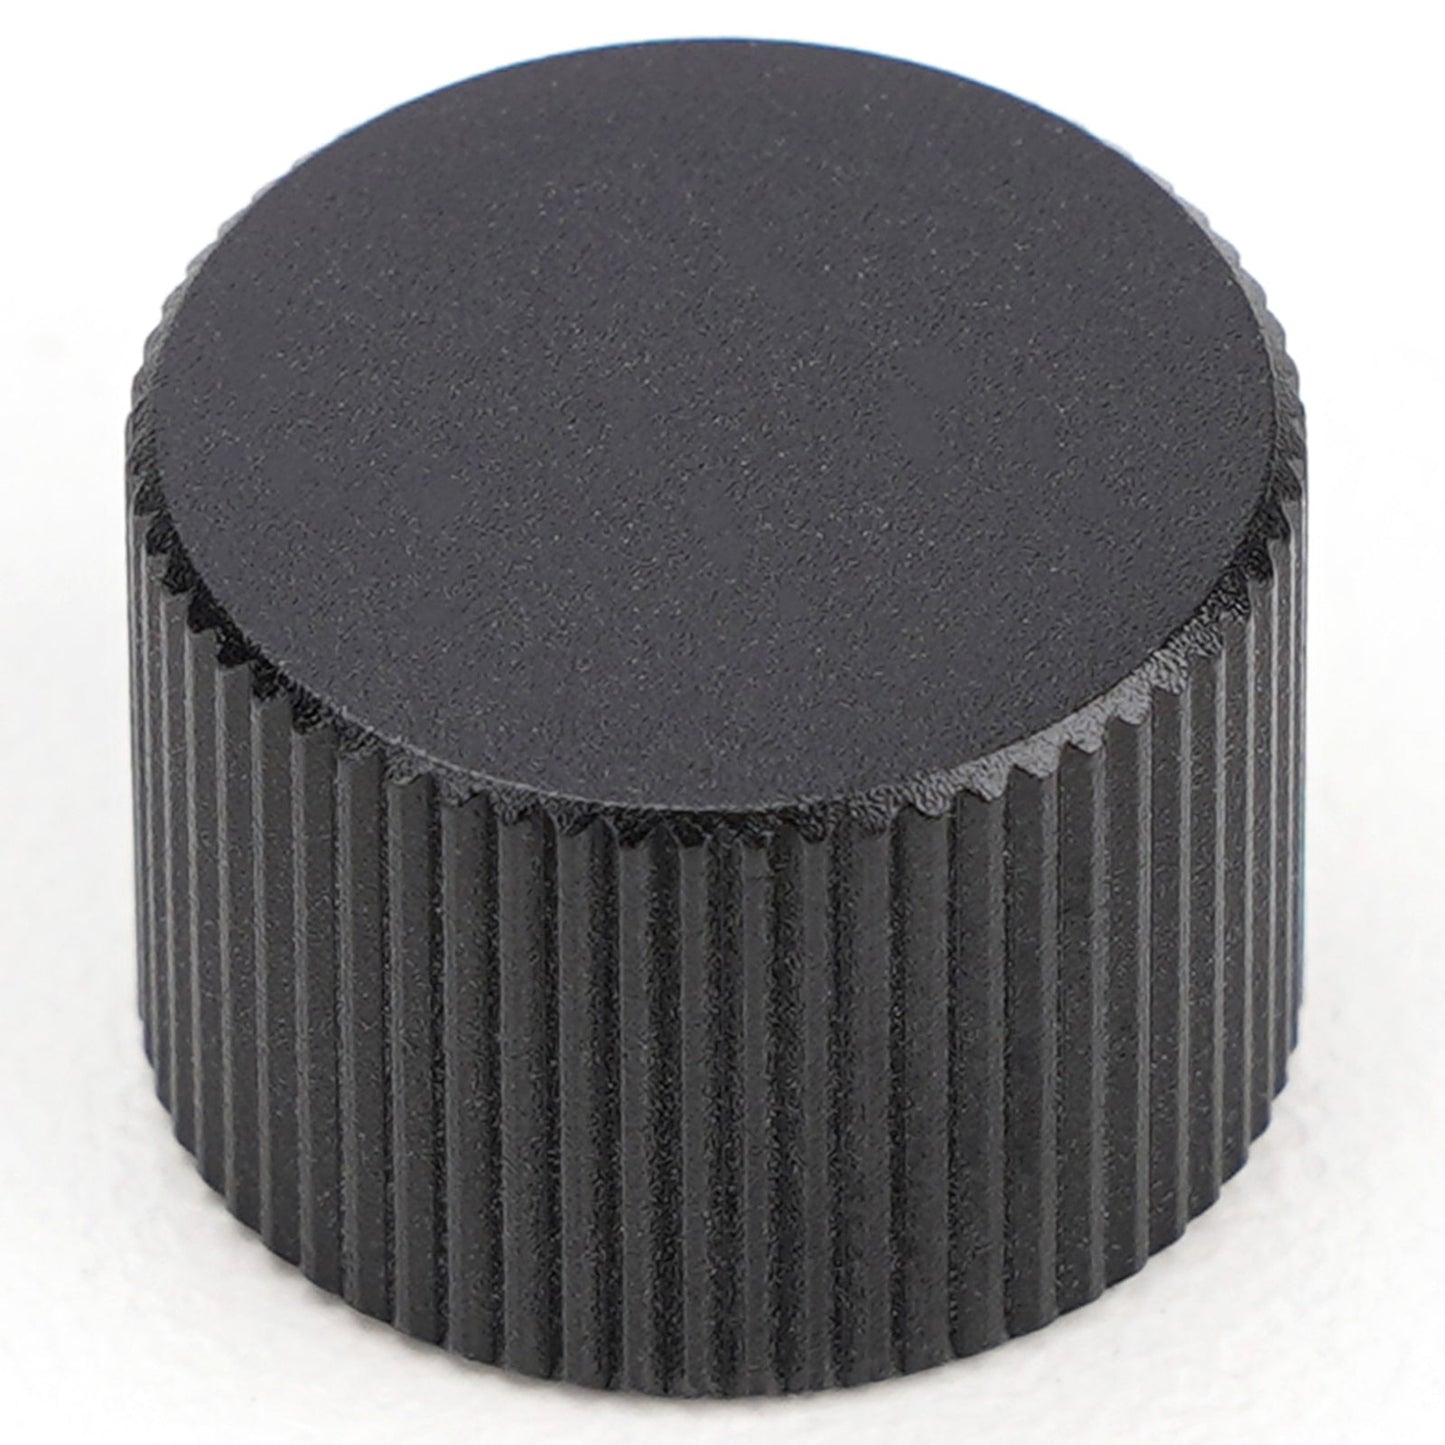 Zoom 65 - black knob